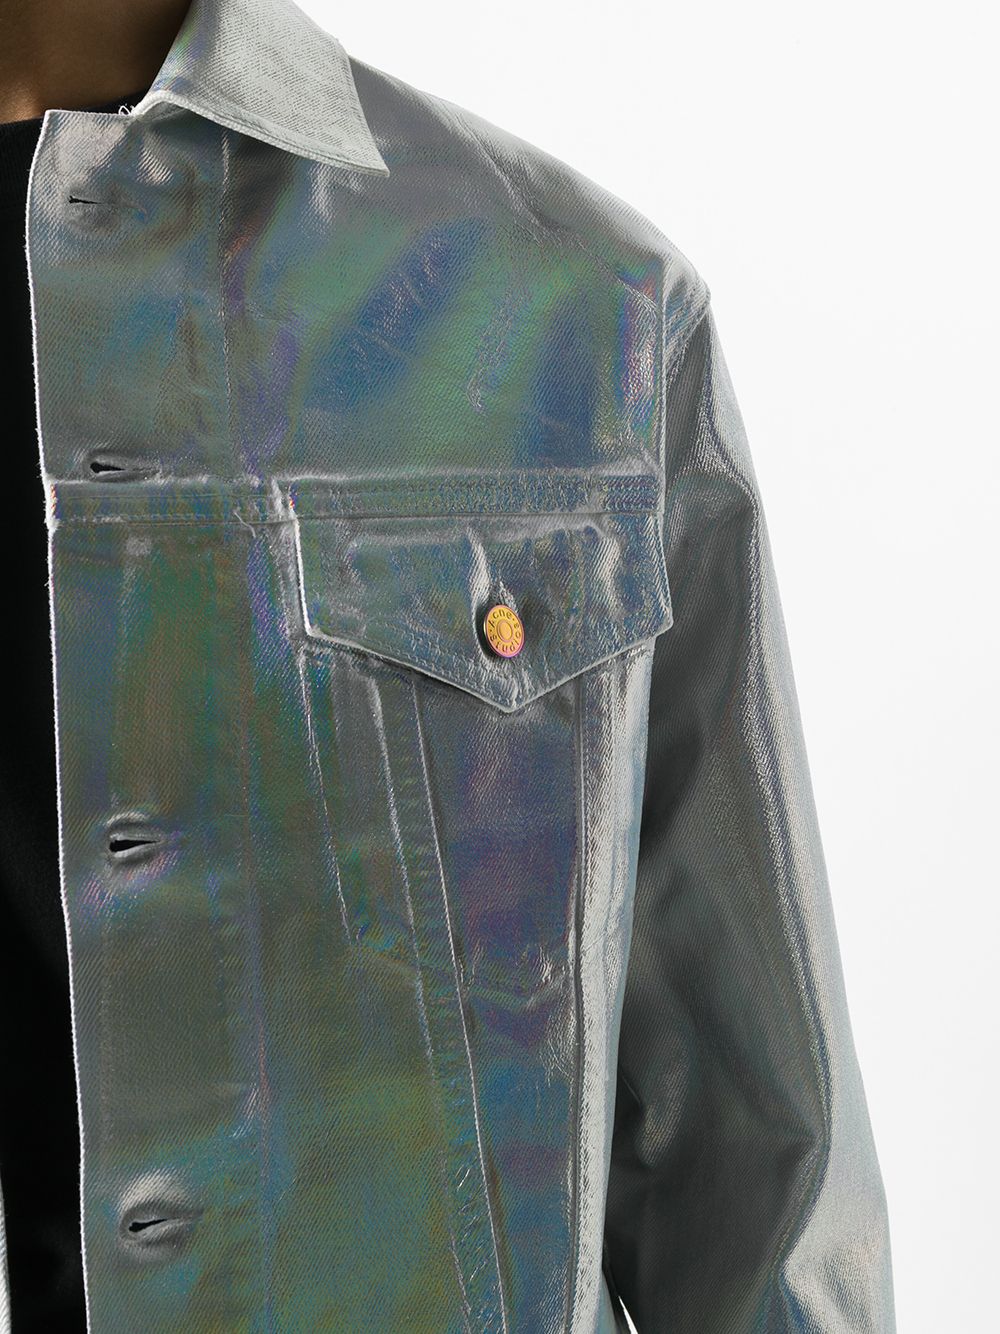 фото Acne studios джинсовая рубашка 1998 holographic foil